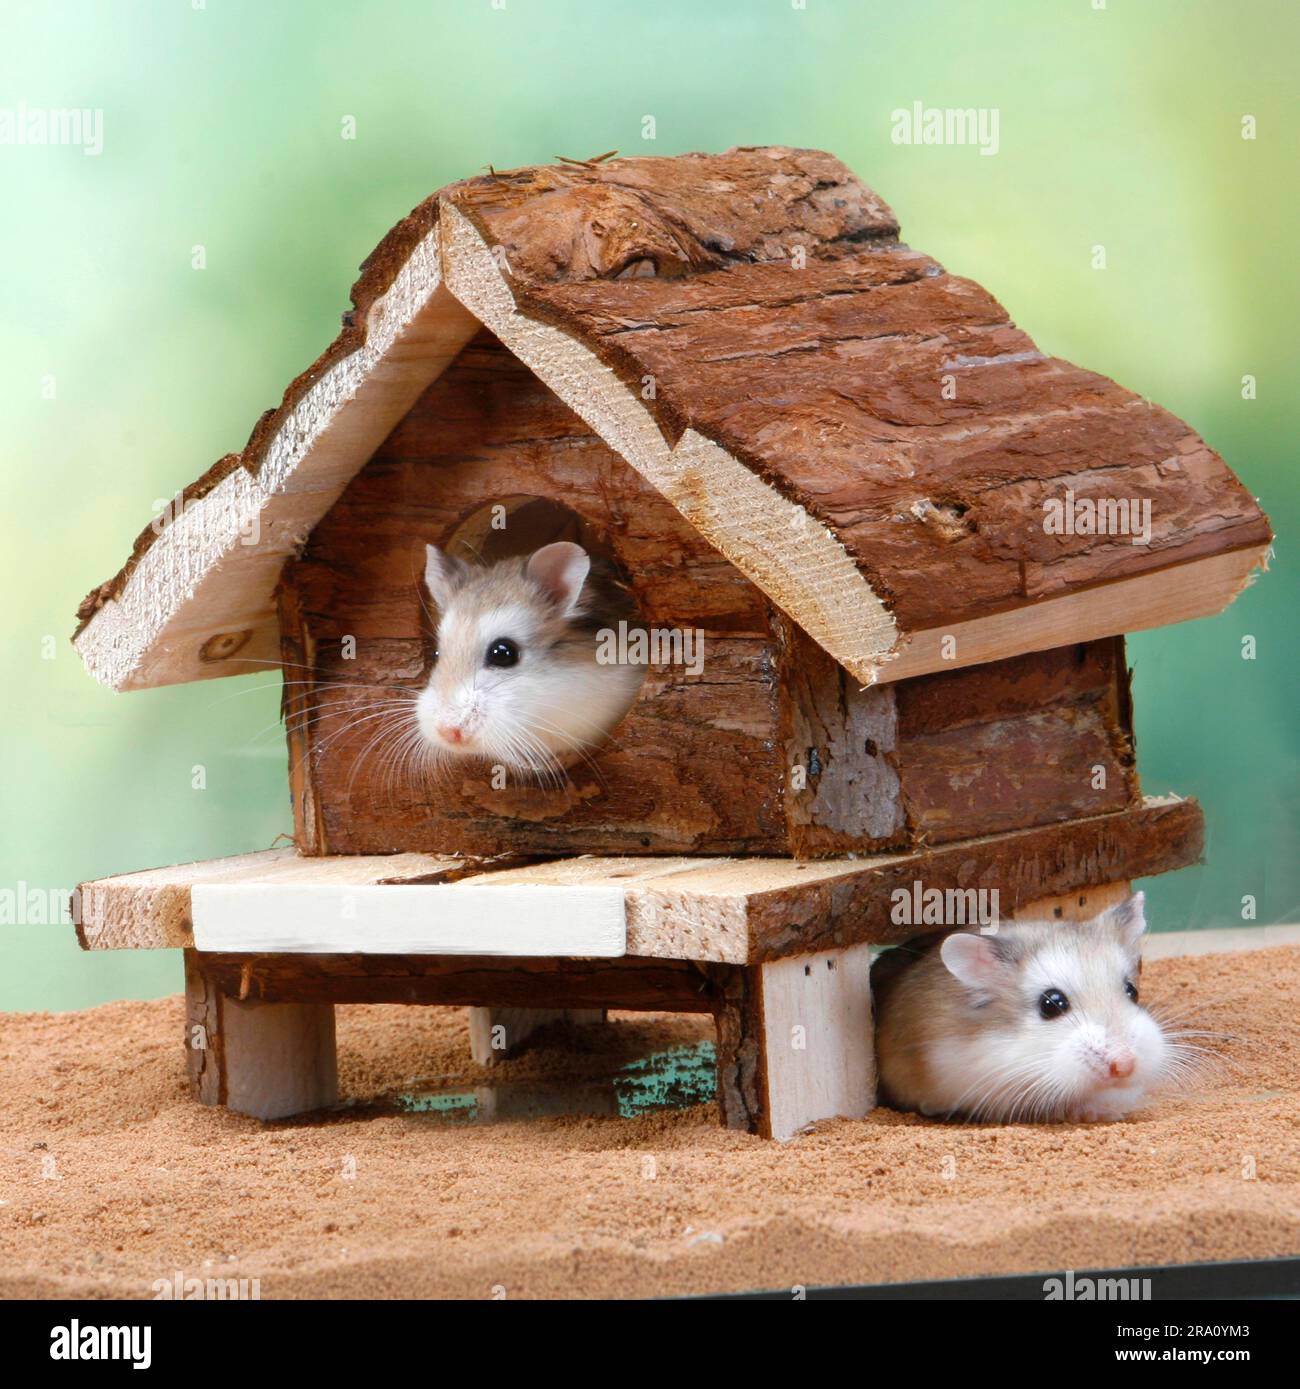 Roborovski dwarf hamster (Phodopus roborovskii) Stock Photo